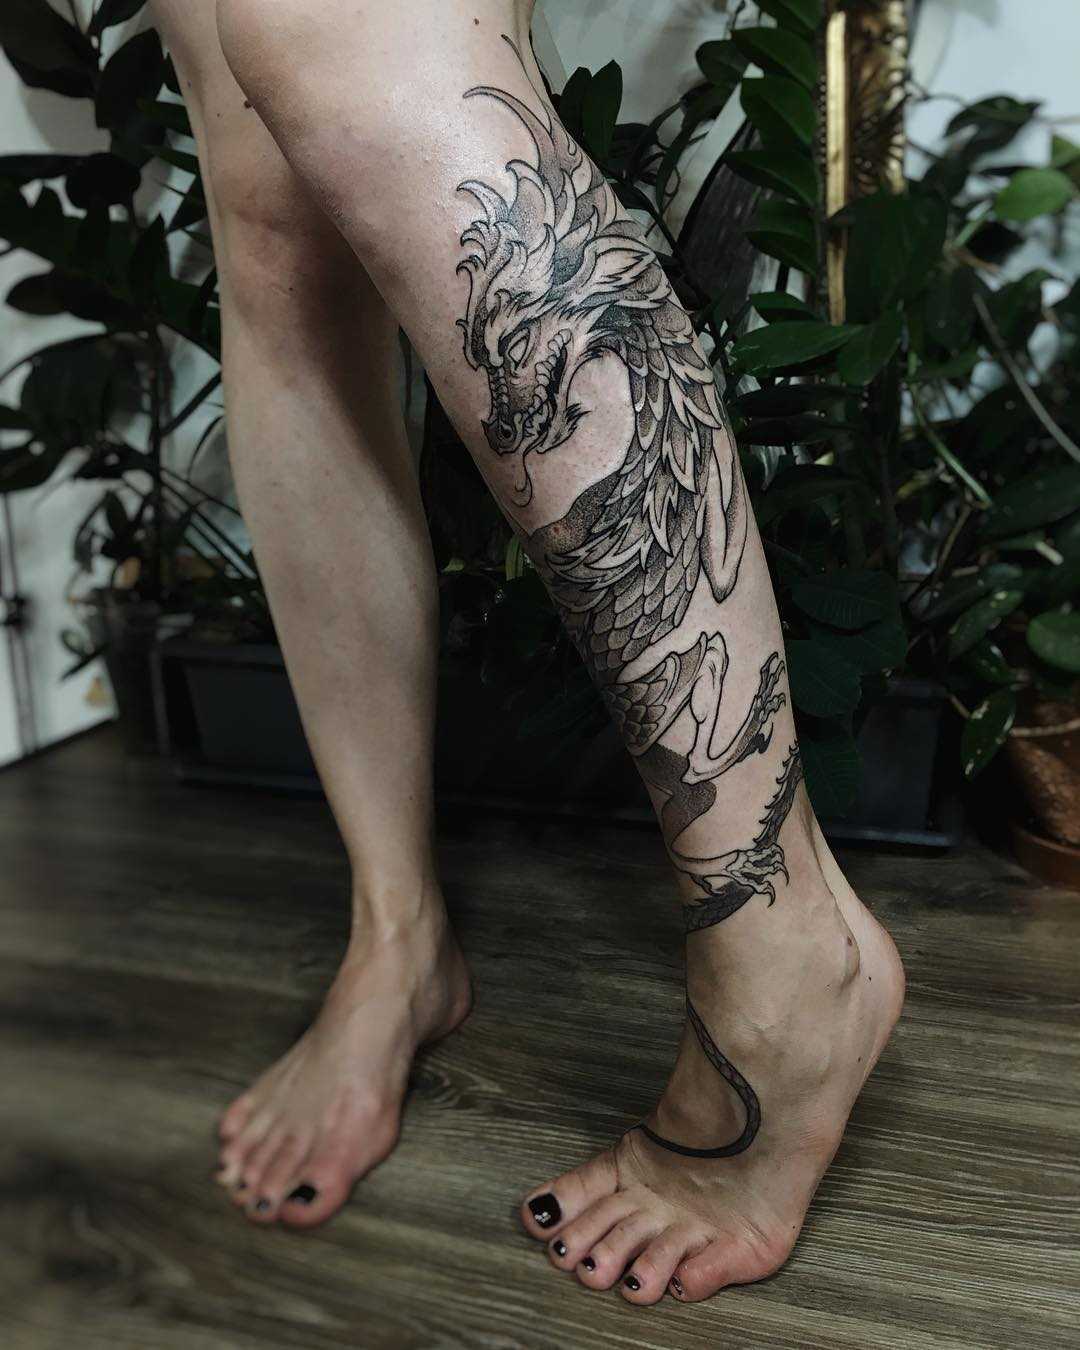 Cool dragon tattoo on the left calf